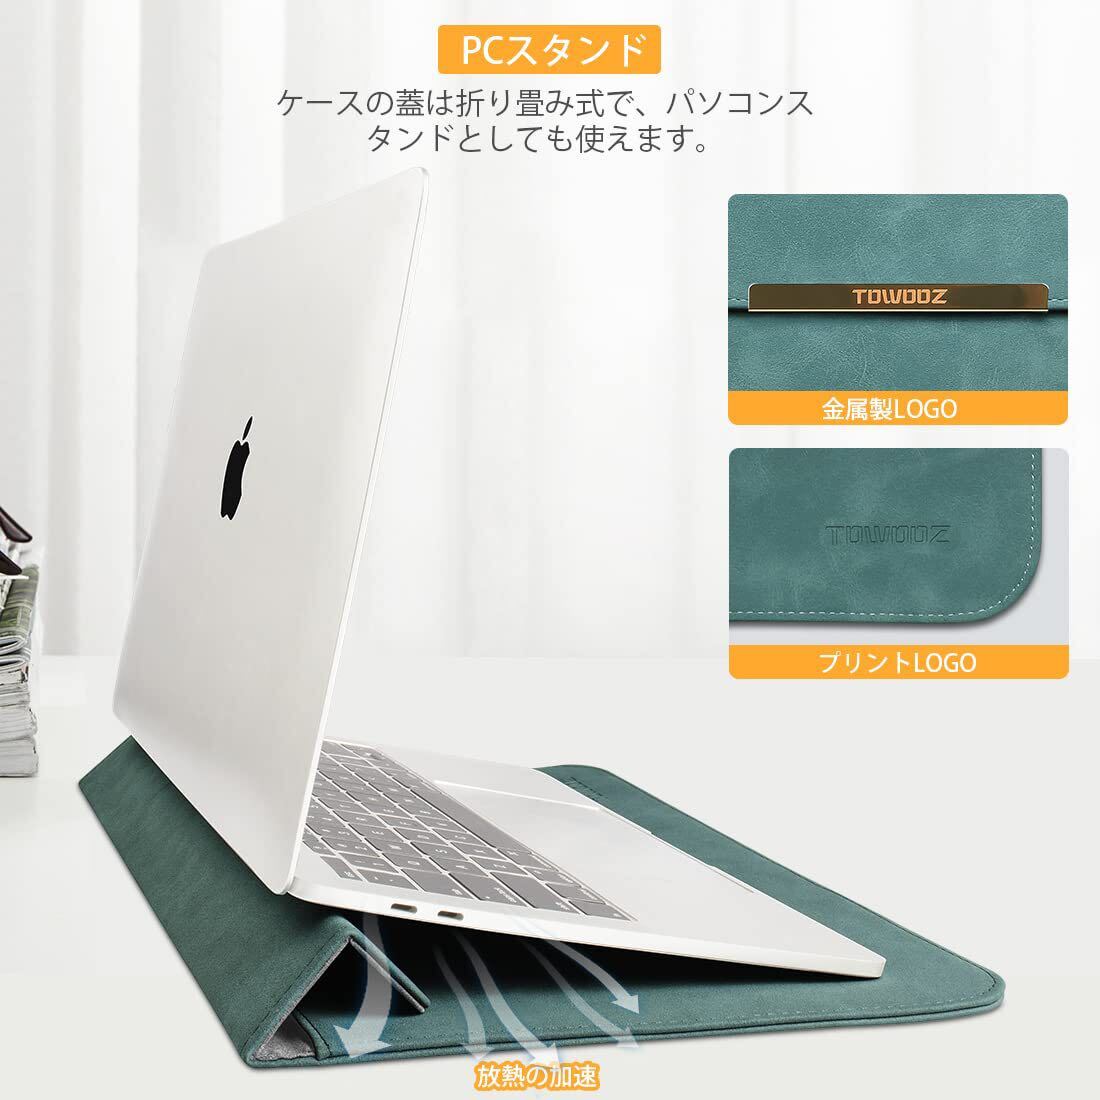 Macbook Pro/Macbook Air ケース 13 インチ 薄型 耐衝撃 撥水 磁石設計 収納袋付き Macbook Air/Pro 13~14インチ 対応の画像5